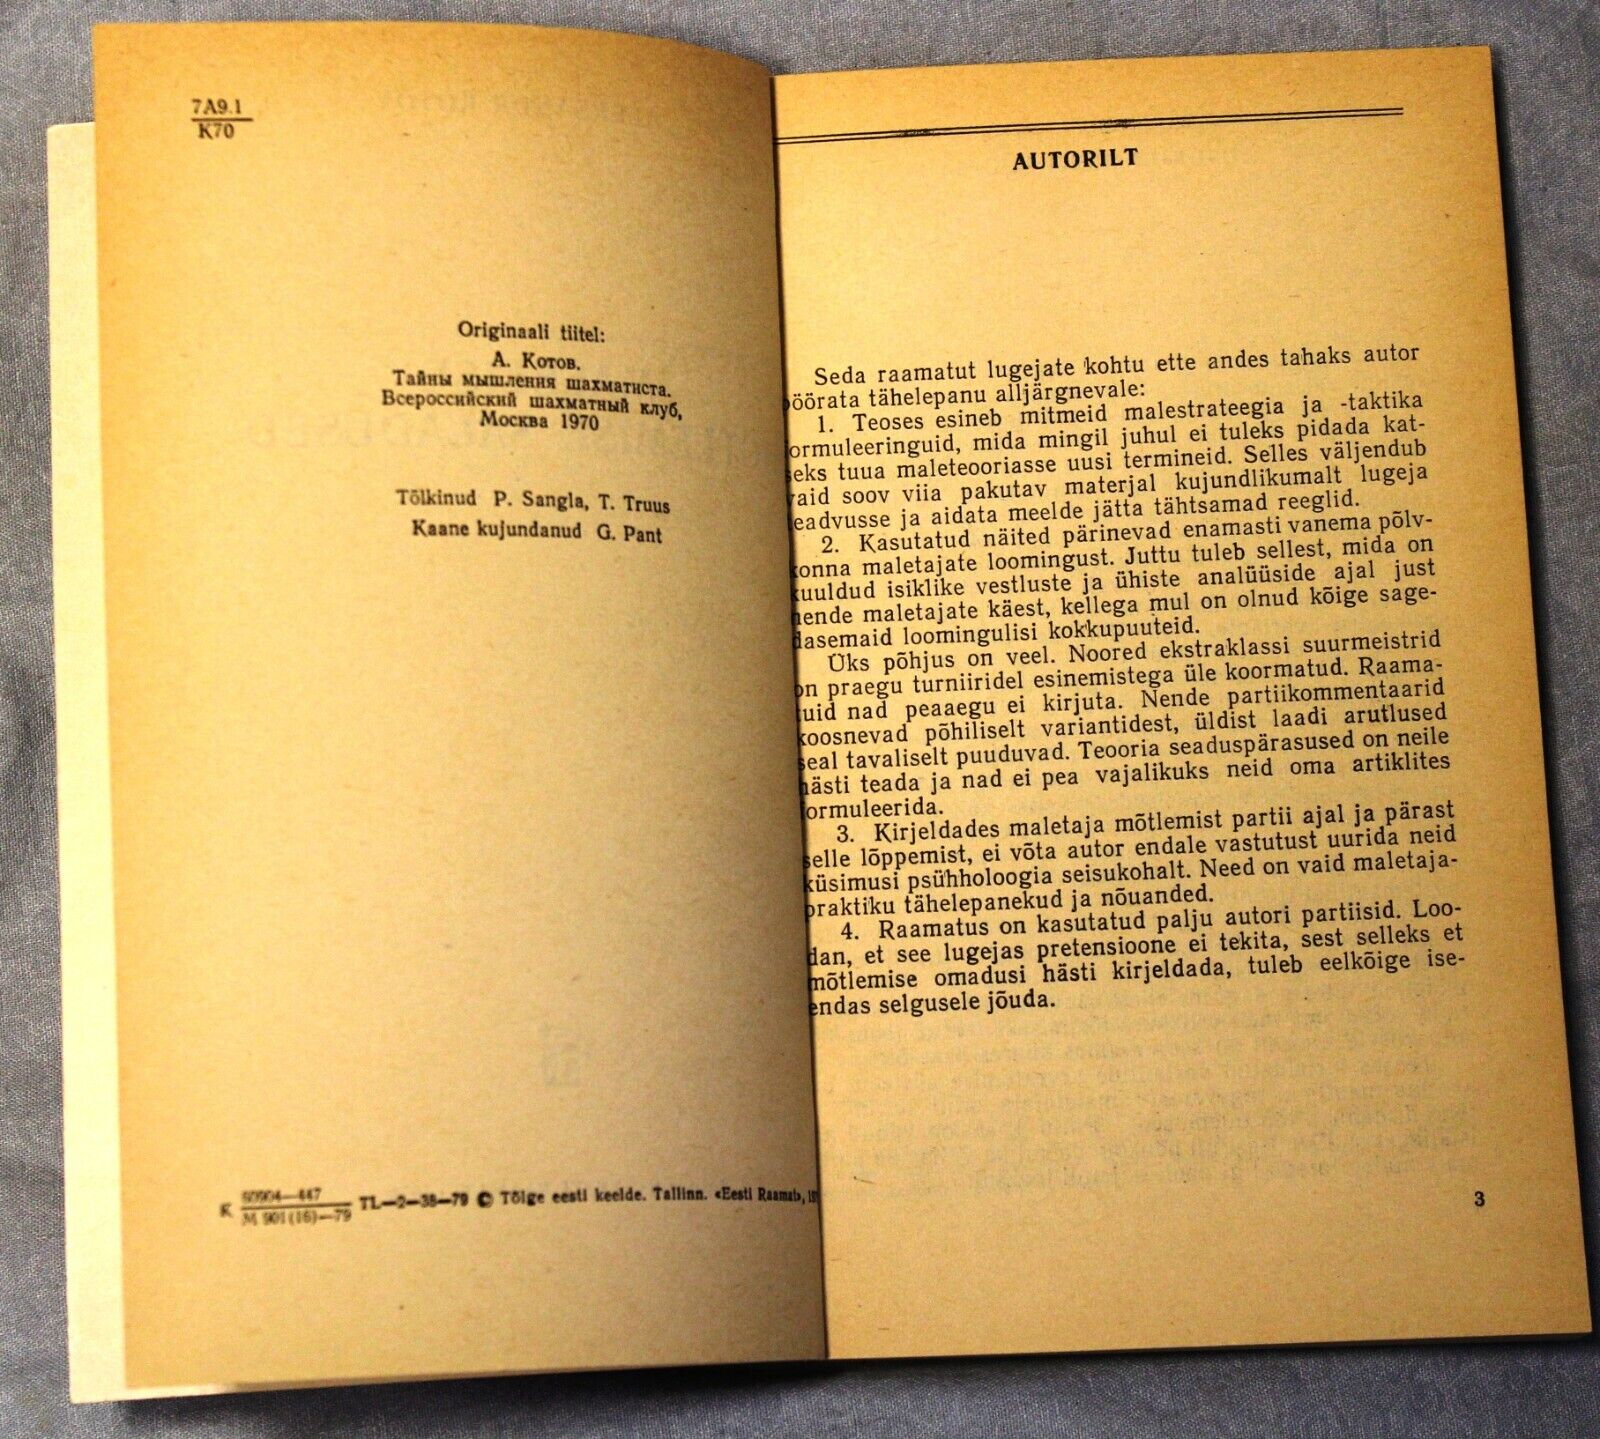 11691.Soviet Chess Book in Estonian. Secrets of chess player's thinking. Tallinn,1979